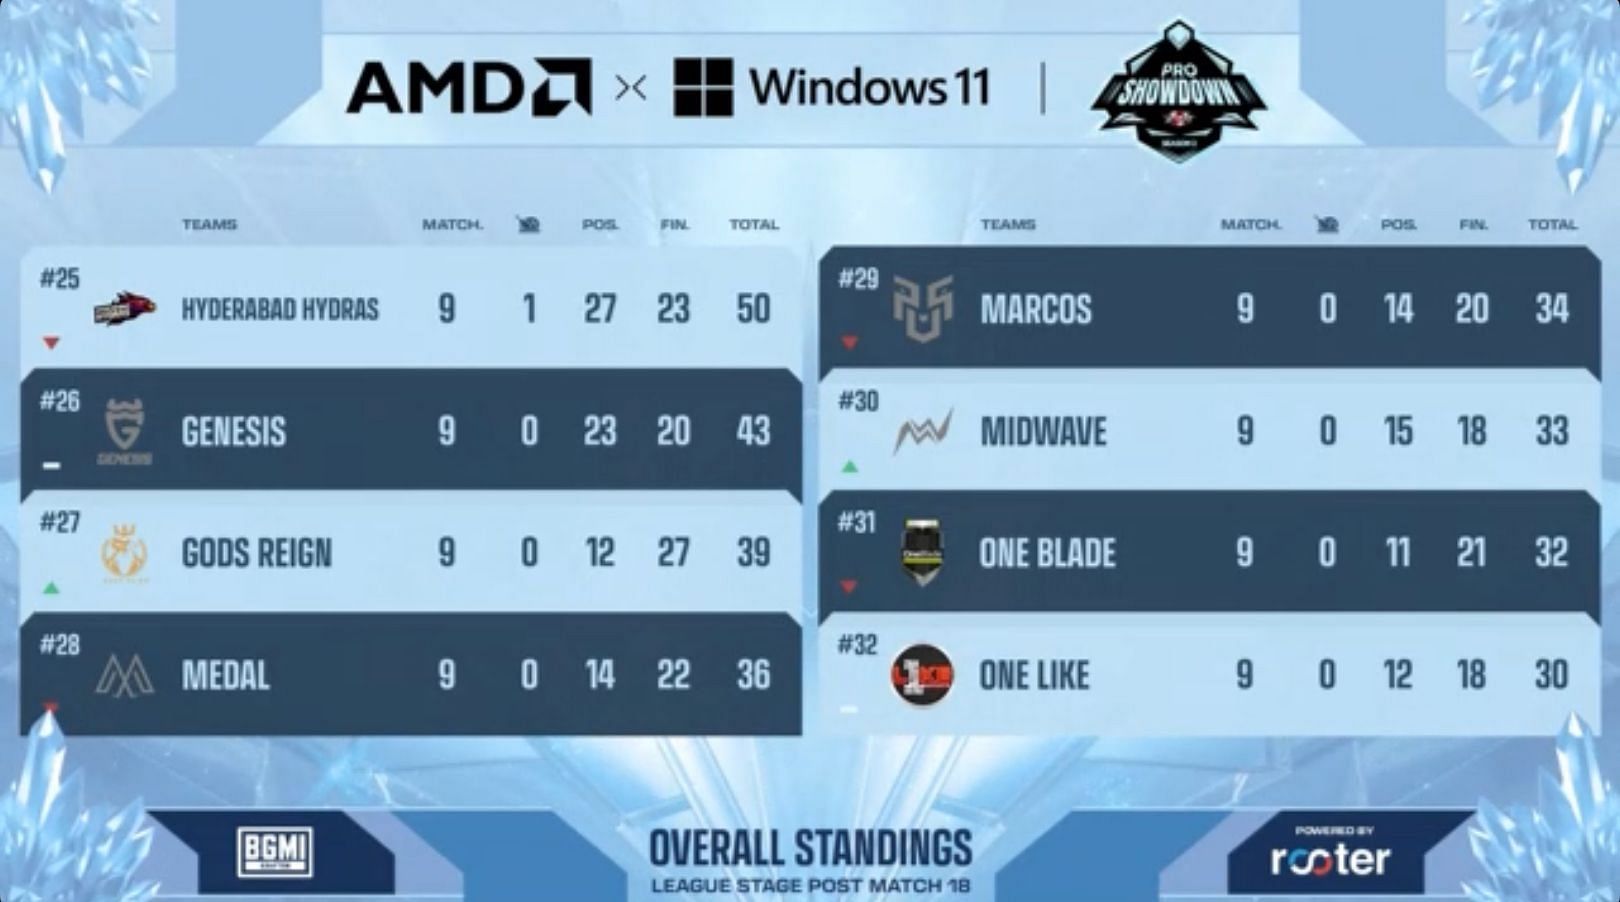 Overall standings of BGMI Pro Showdown Week 1 (Image via Upthrust)